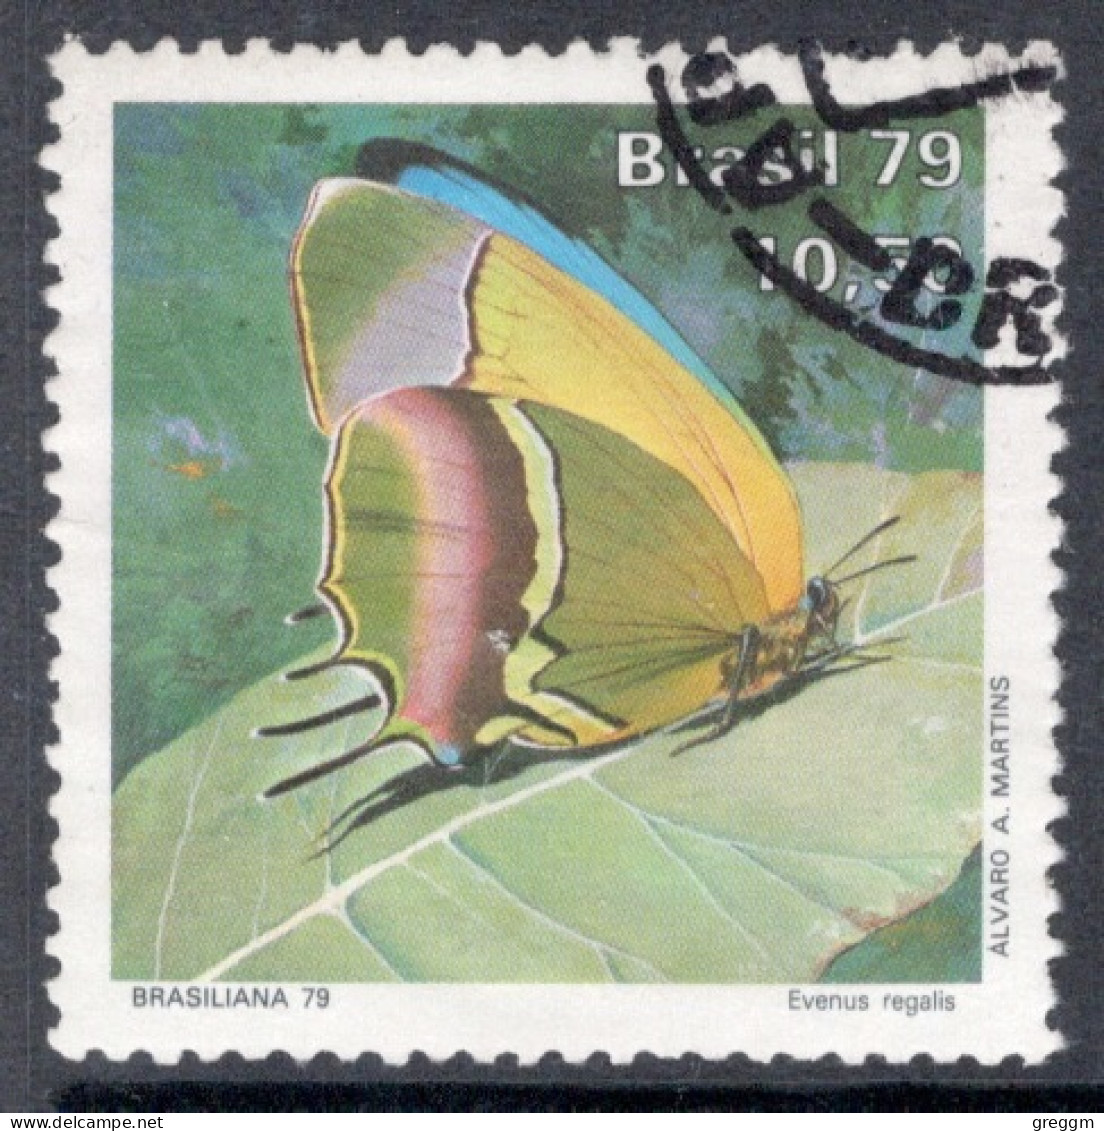 Brazil 1979 A Single Stamp International Stamp Exhibition "Brasiliana 79" - Butterflies In Fine Used - Gebruikt